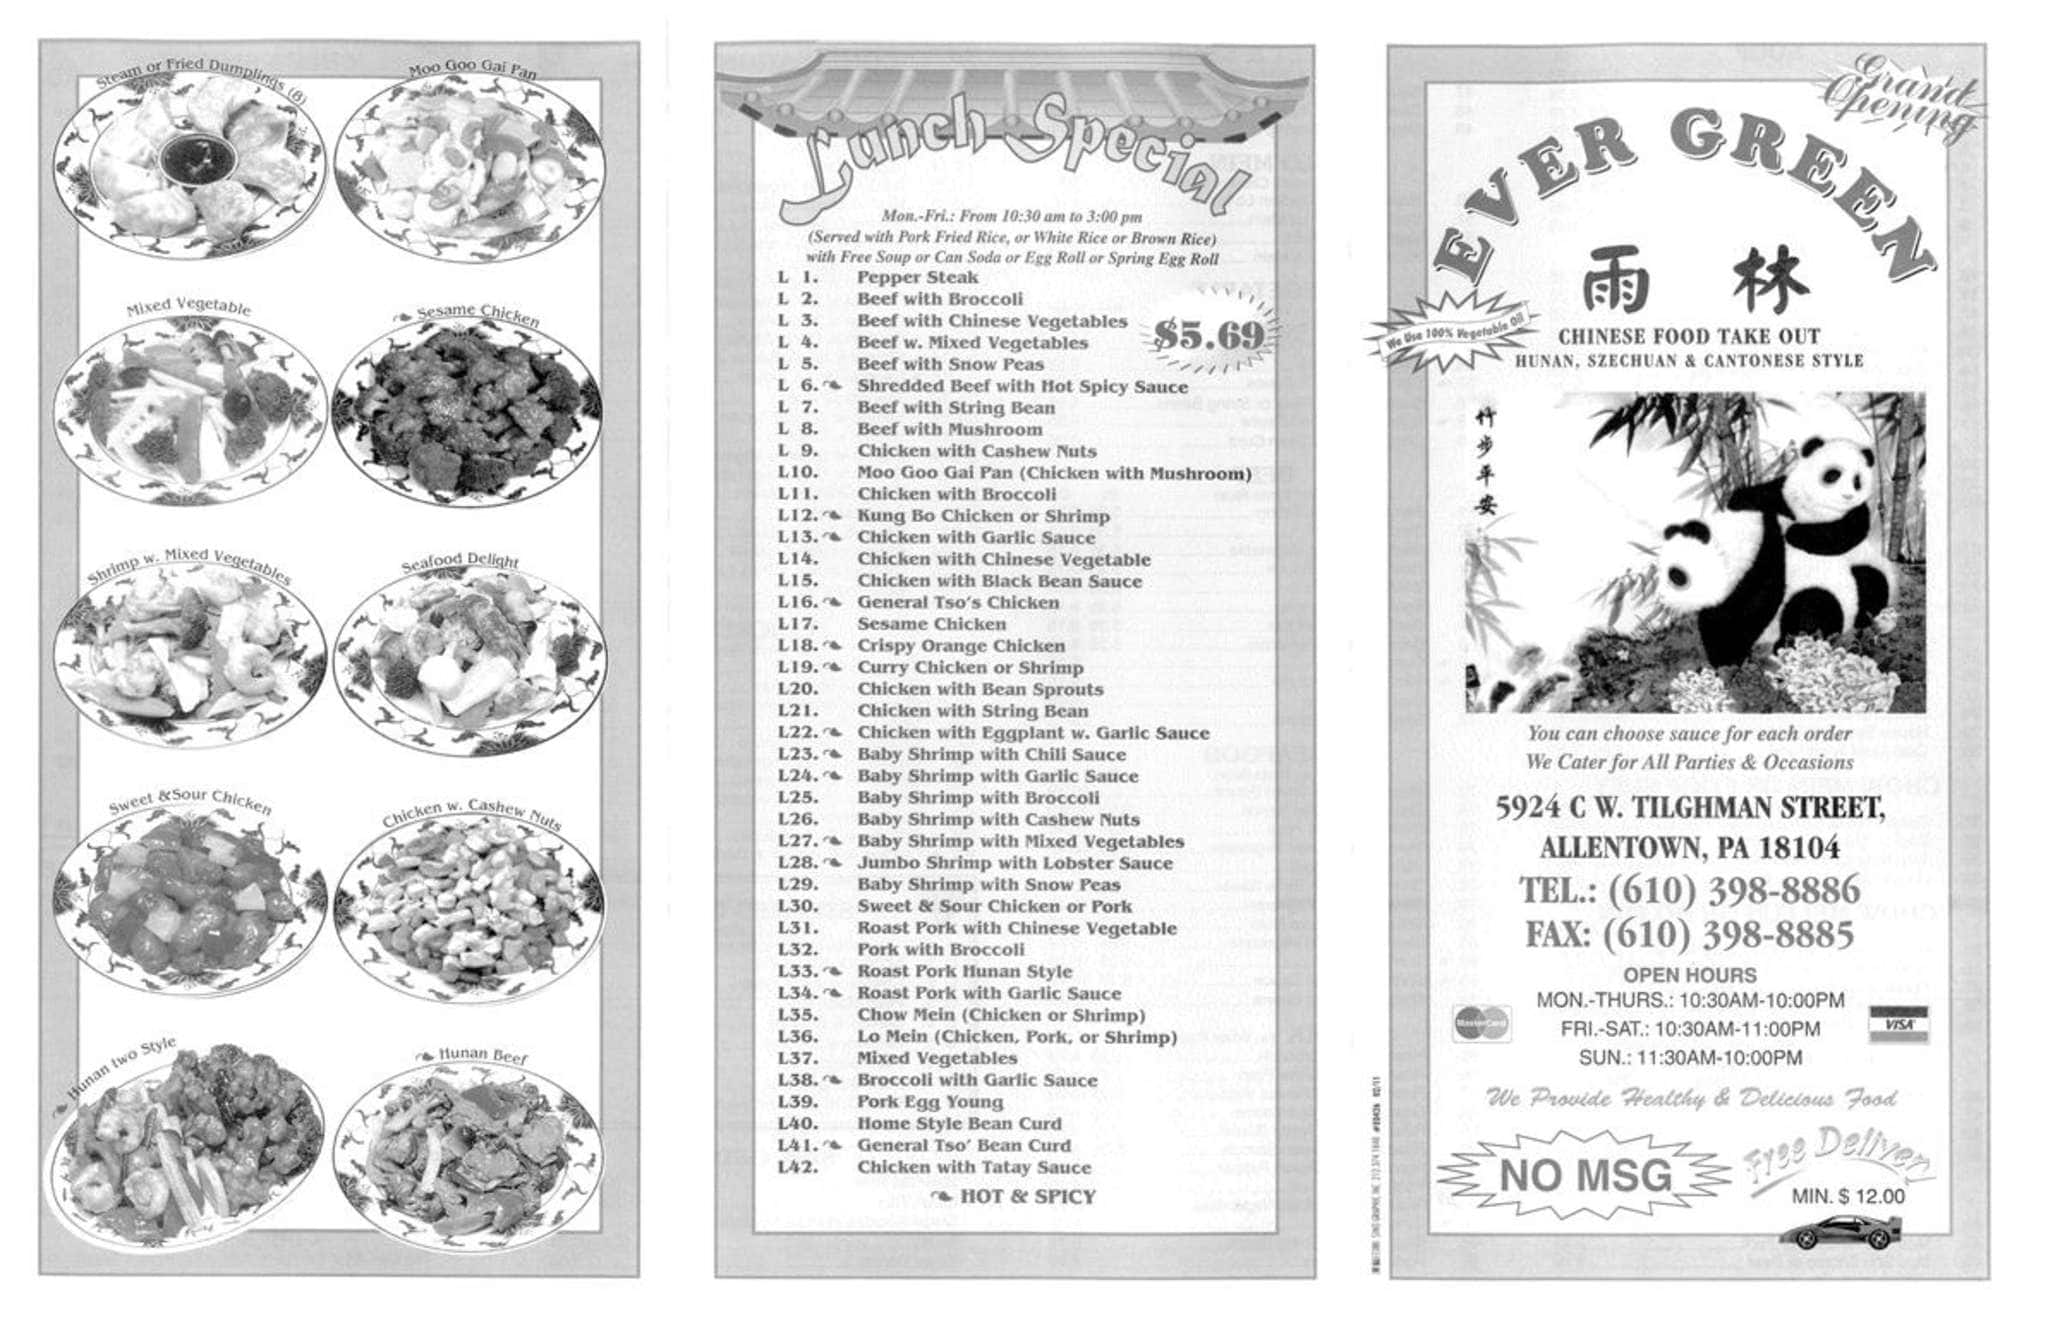 evergreen restaurant tourist club area menu